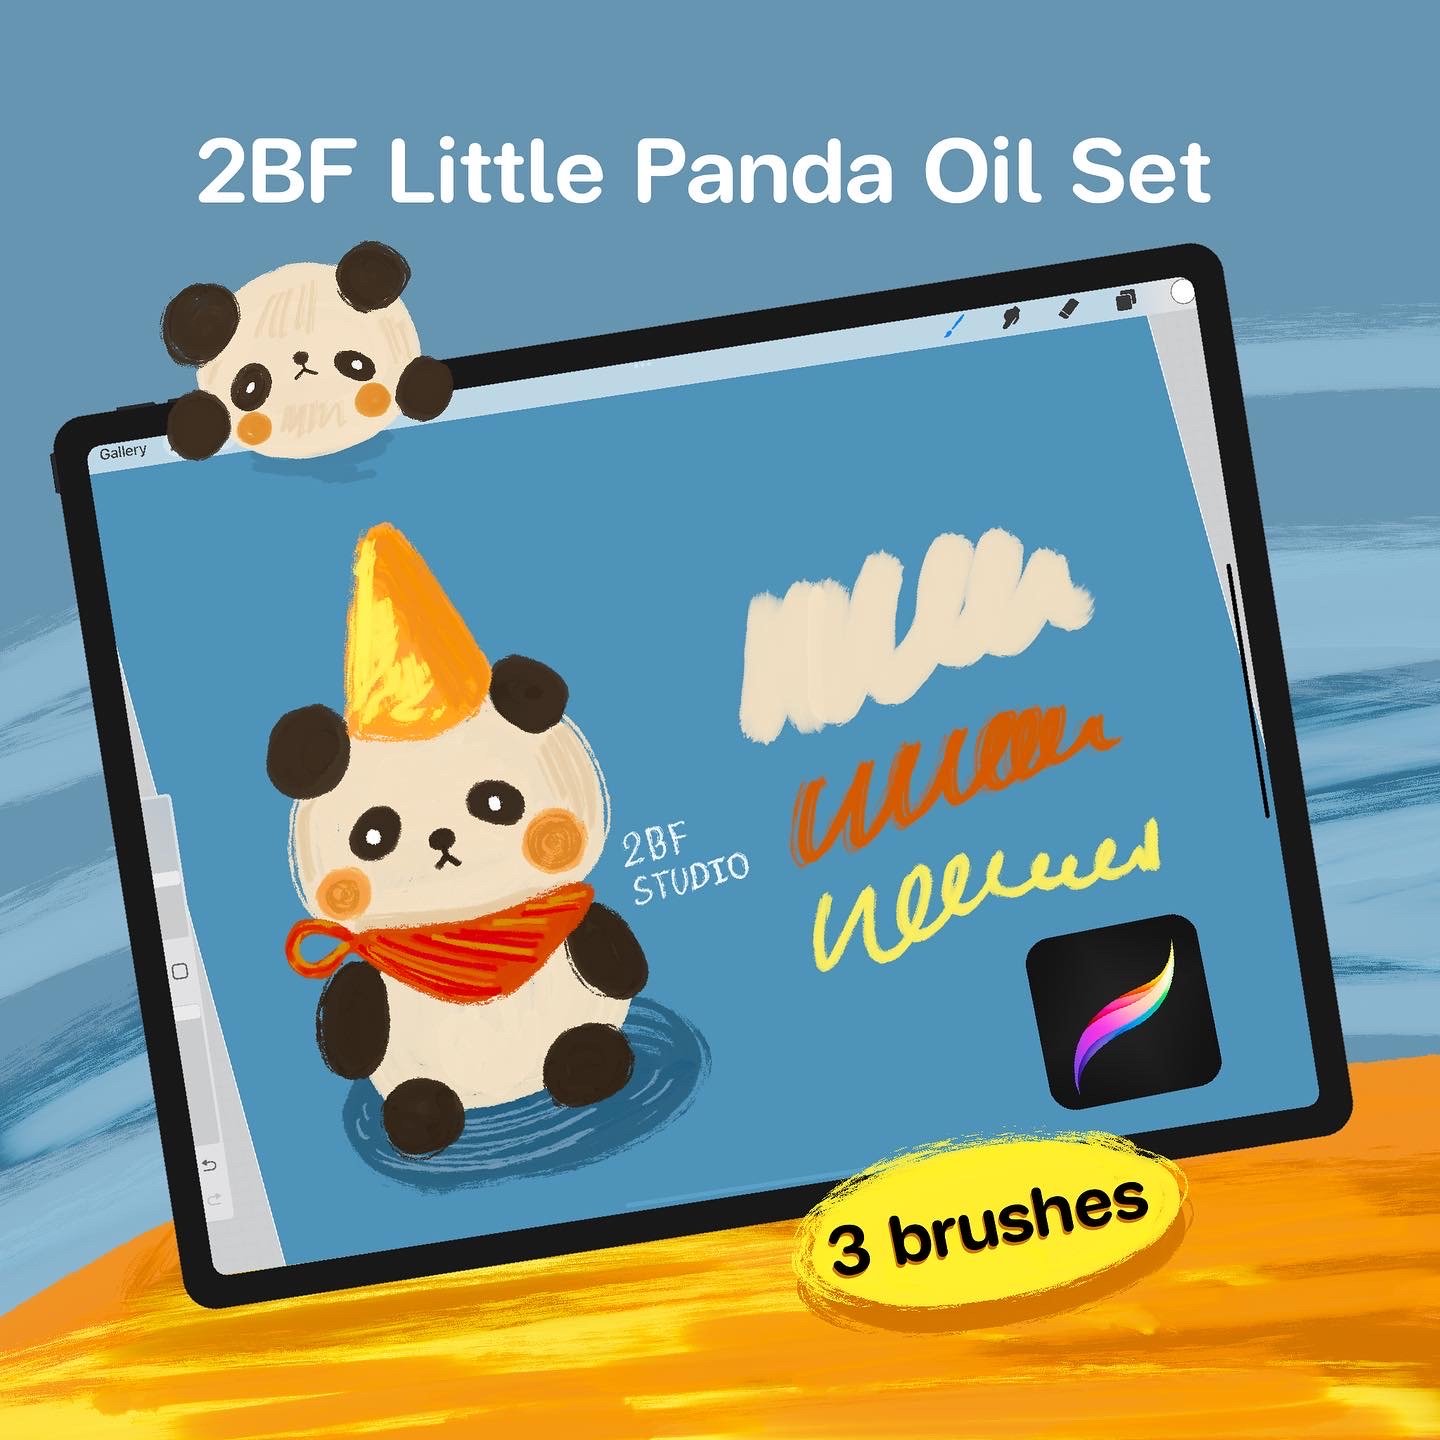 2BF Little Panda Oil Set